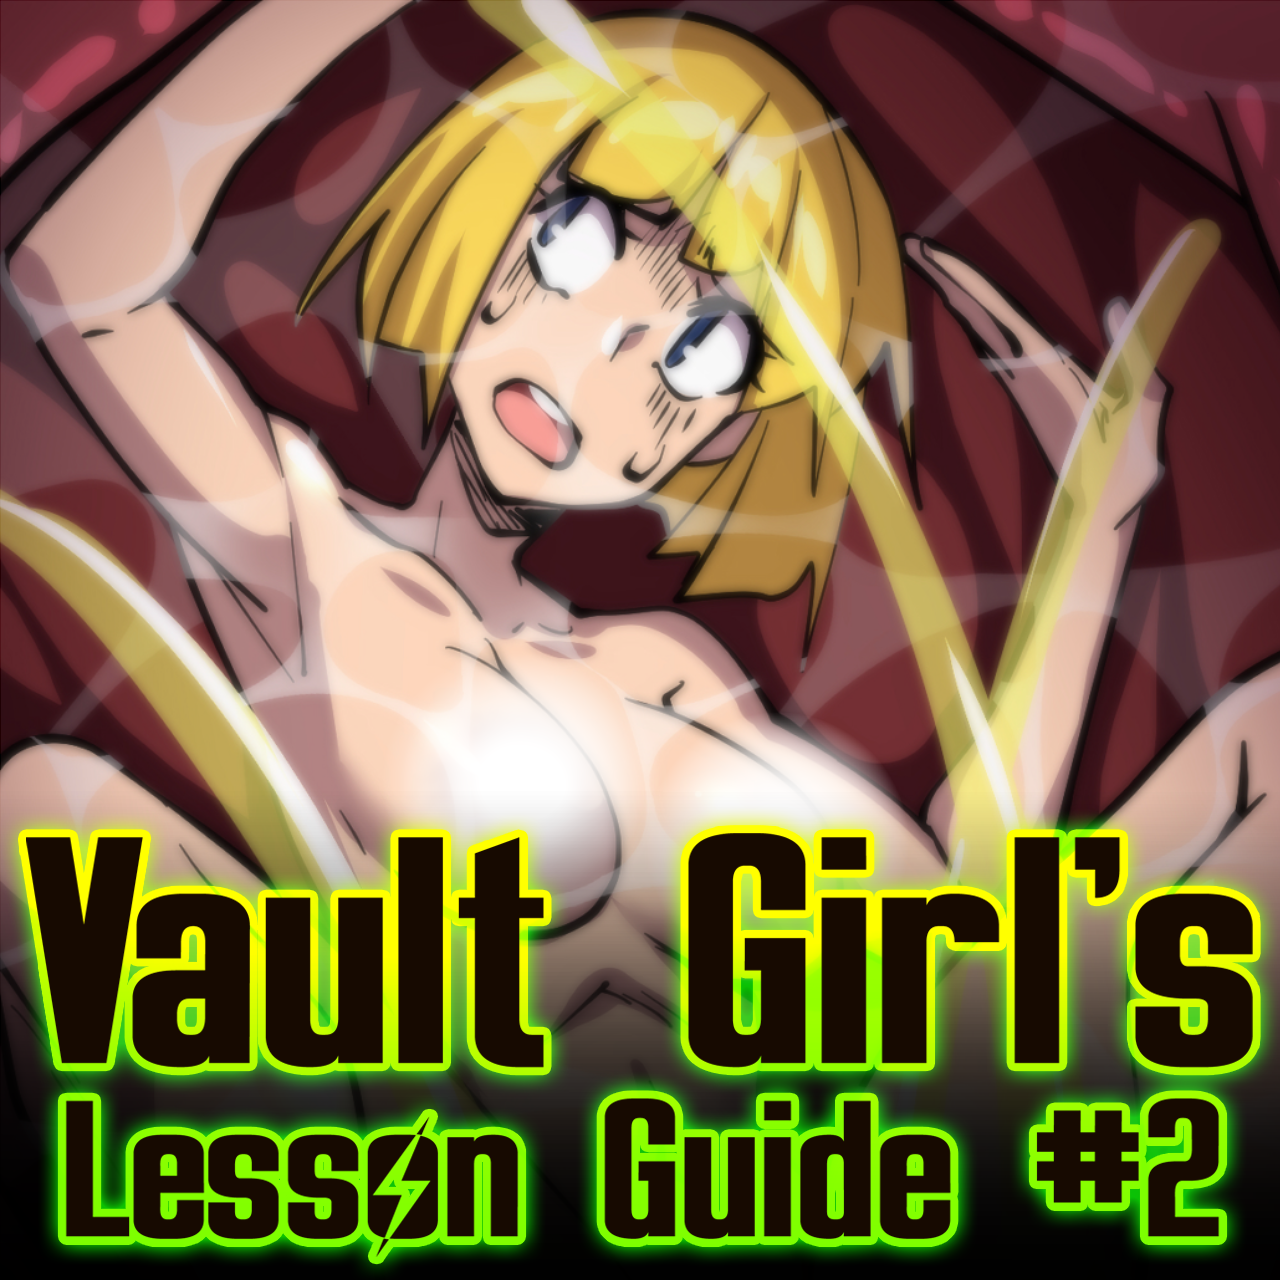 Vault Girl's Lesson Guide #2